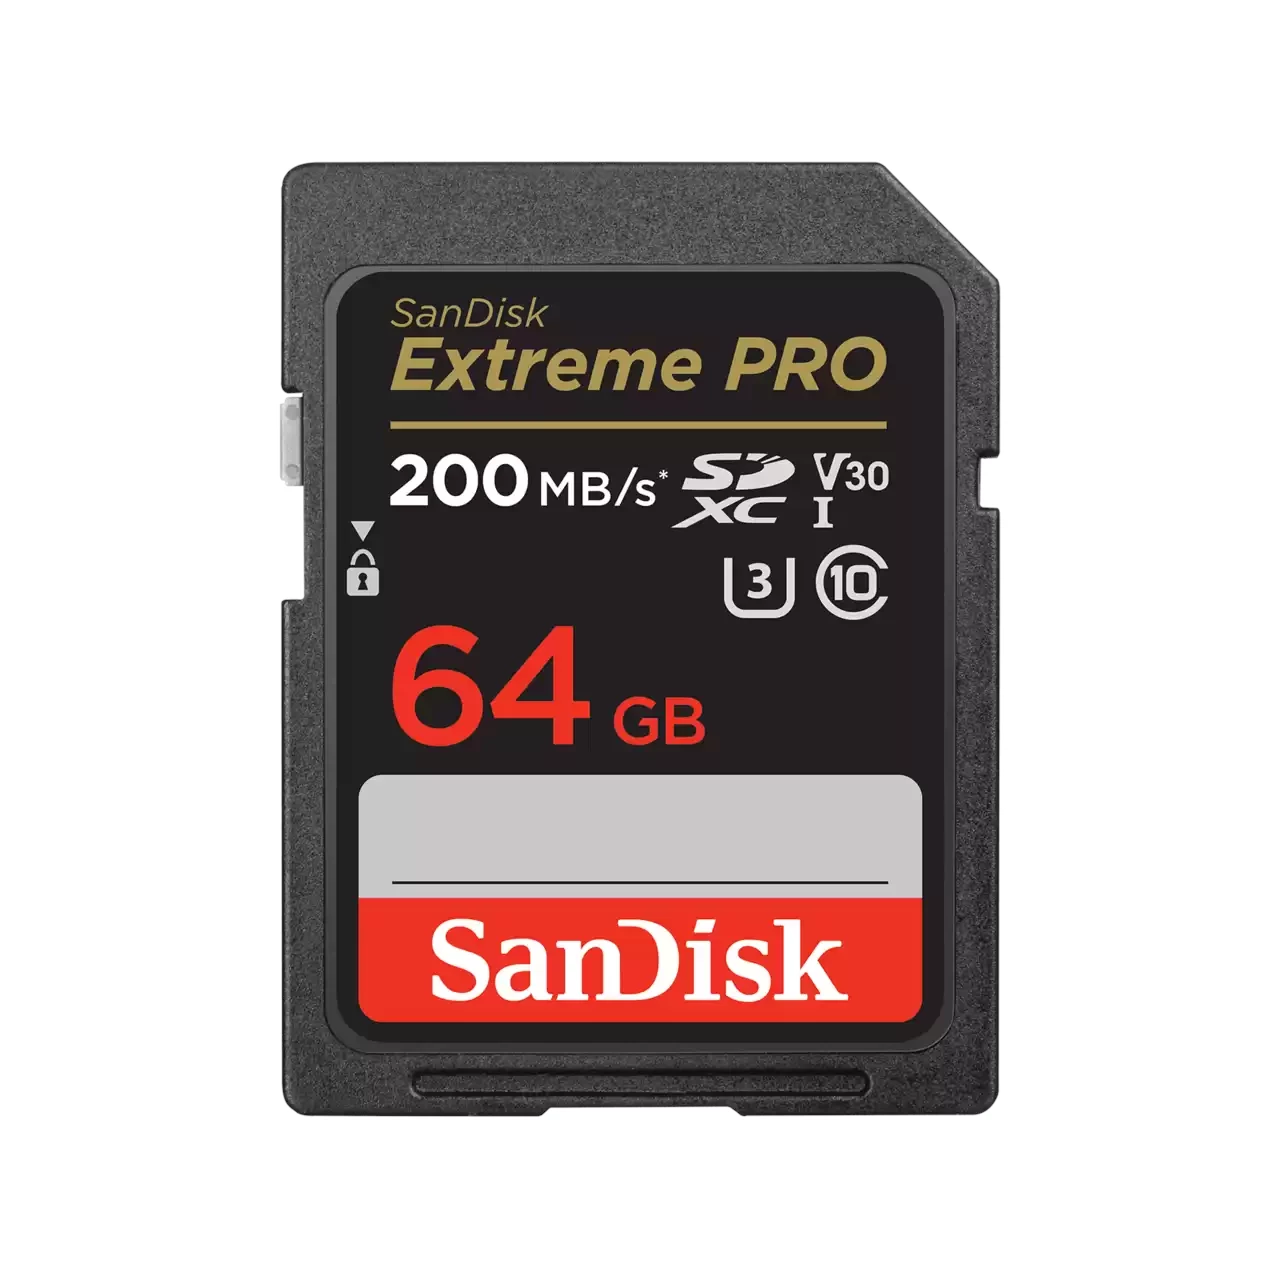 Sandisk Extreme PRO 64Gb SDXC UHS-I Card #sDsDXXU-064g-gN4iN